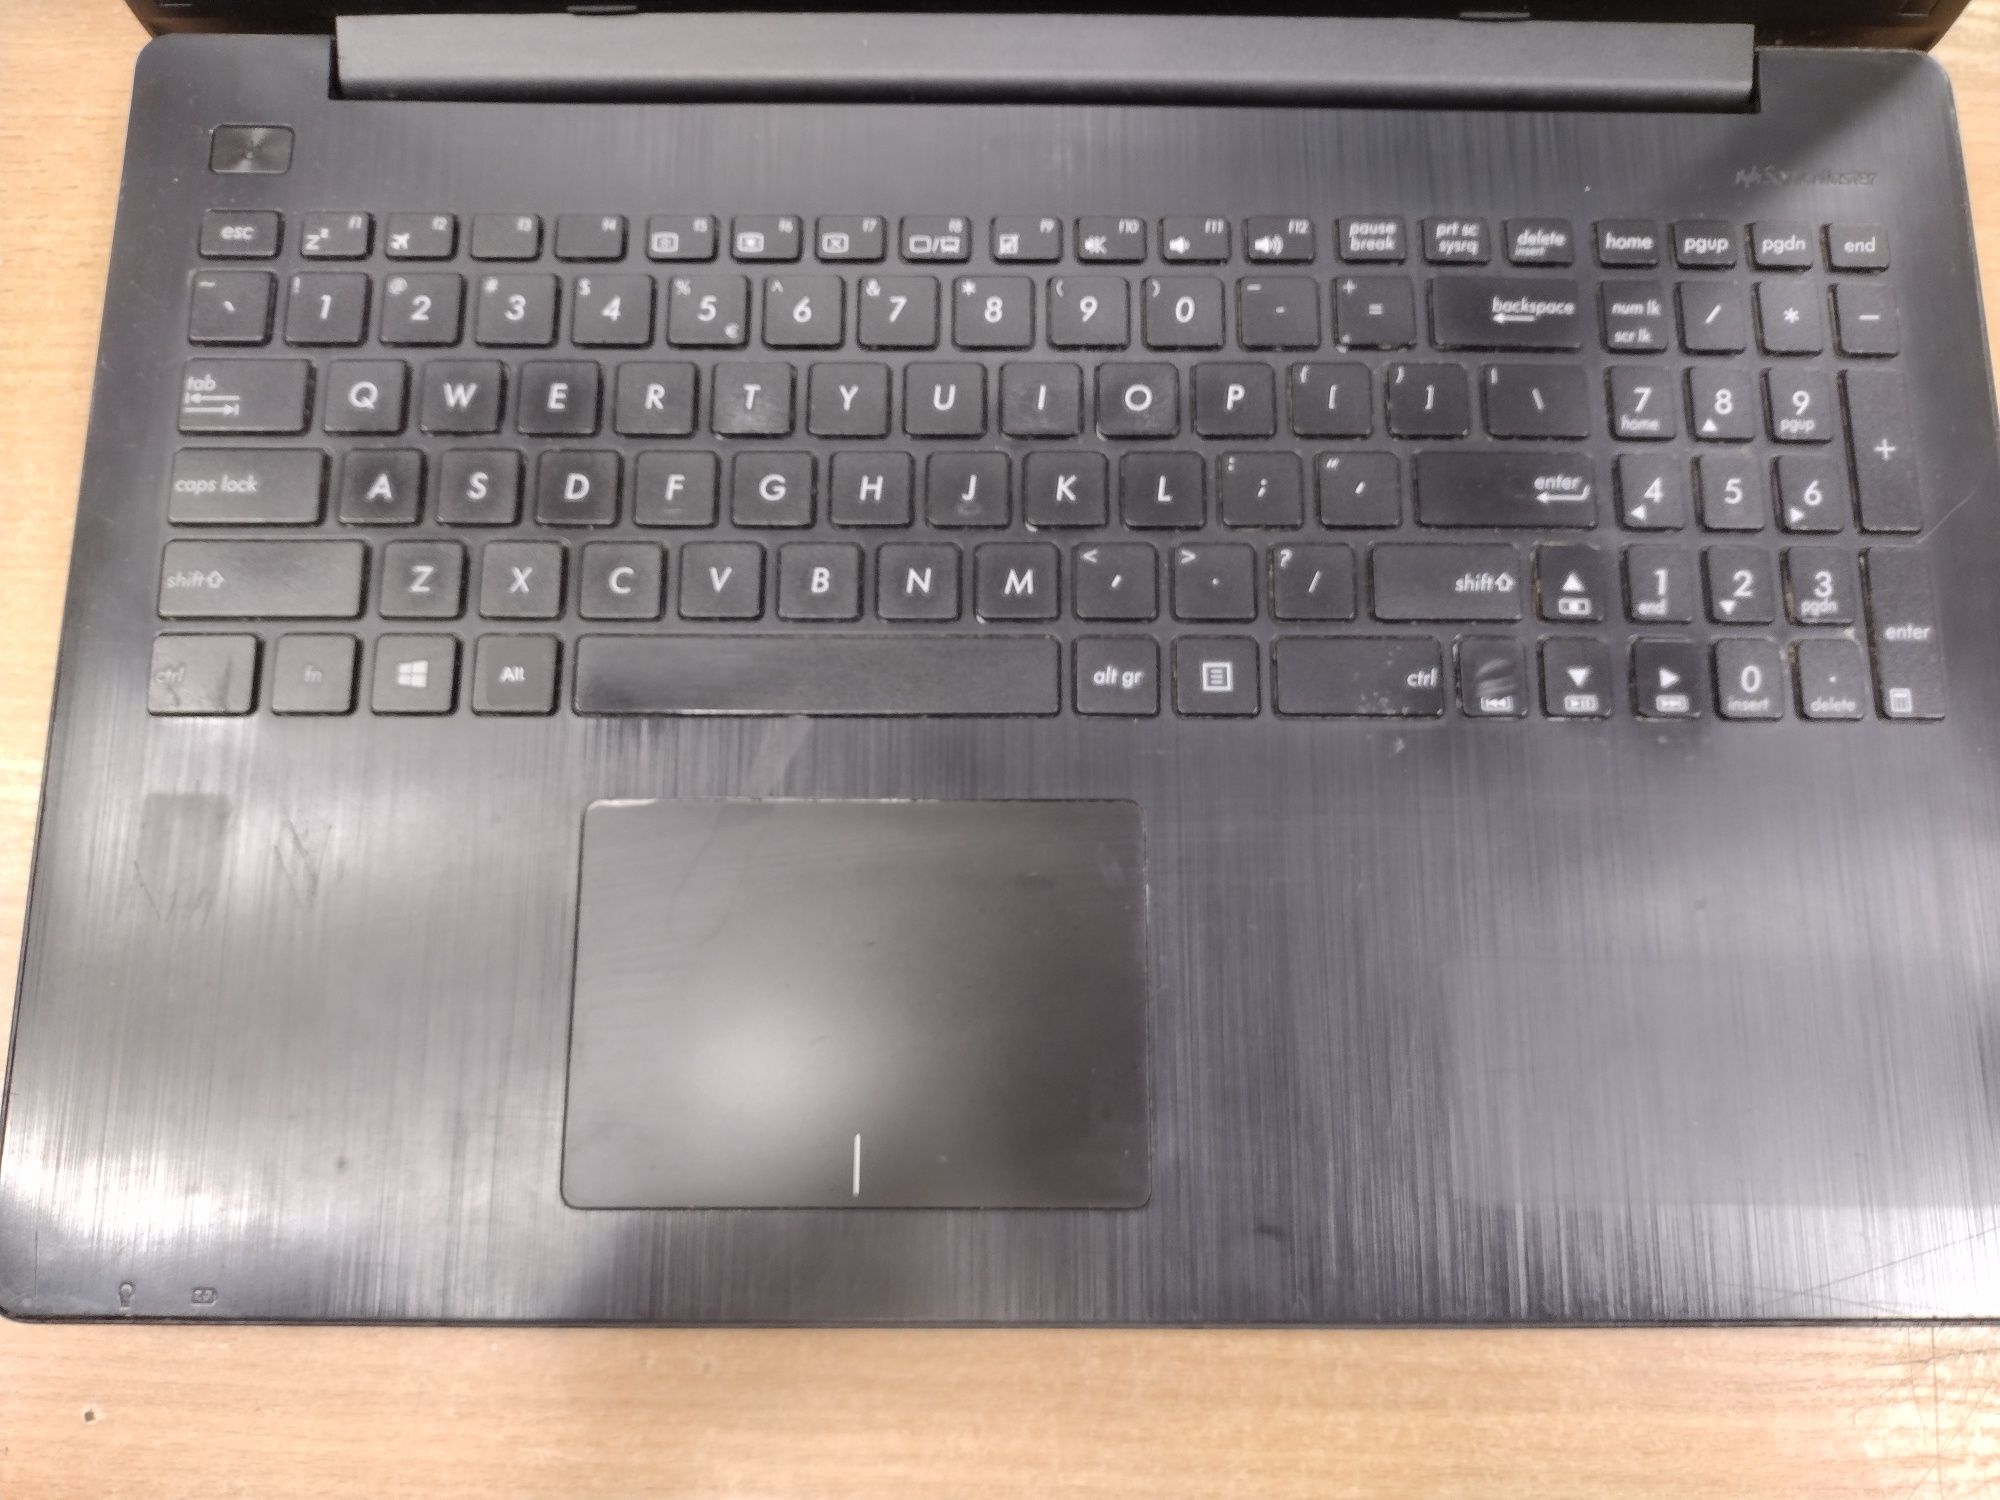 Laptop ASUS X553M *OPIS* -Komis MADEJ skup-sprzedaż Dębica